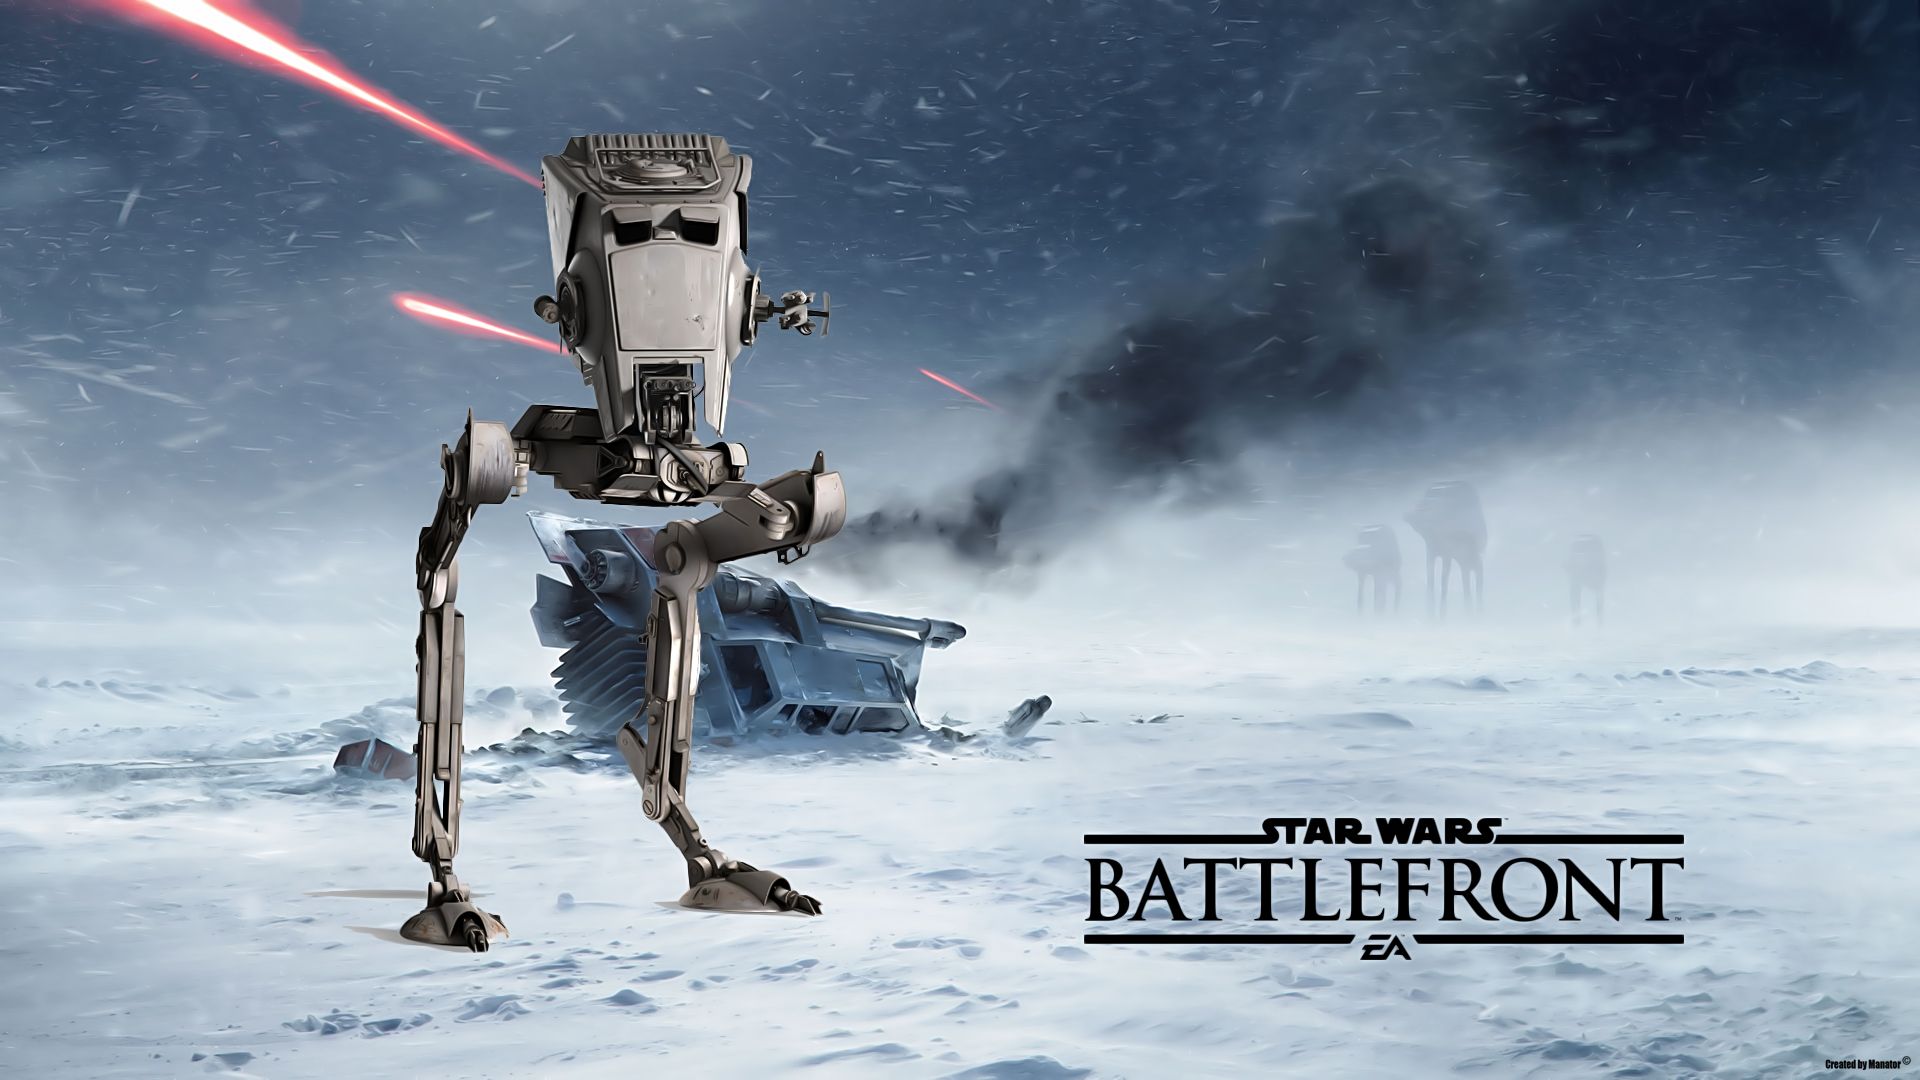 Boba Fett Millennium Falcon Playable In Star Wars Battlefront